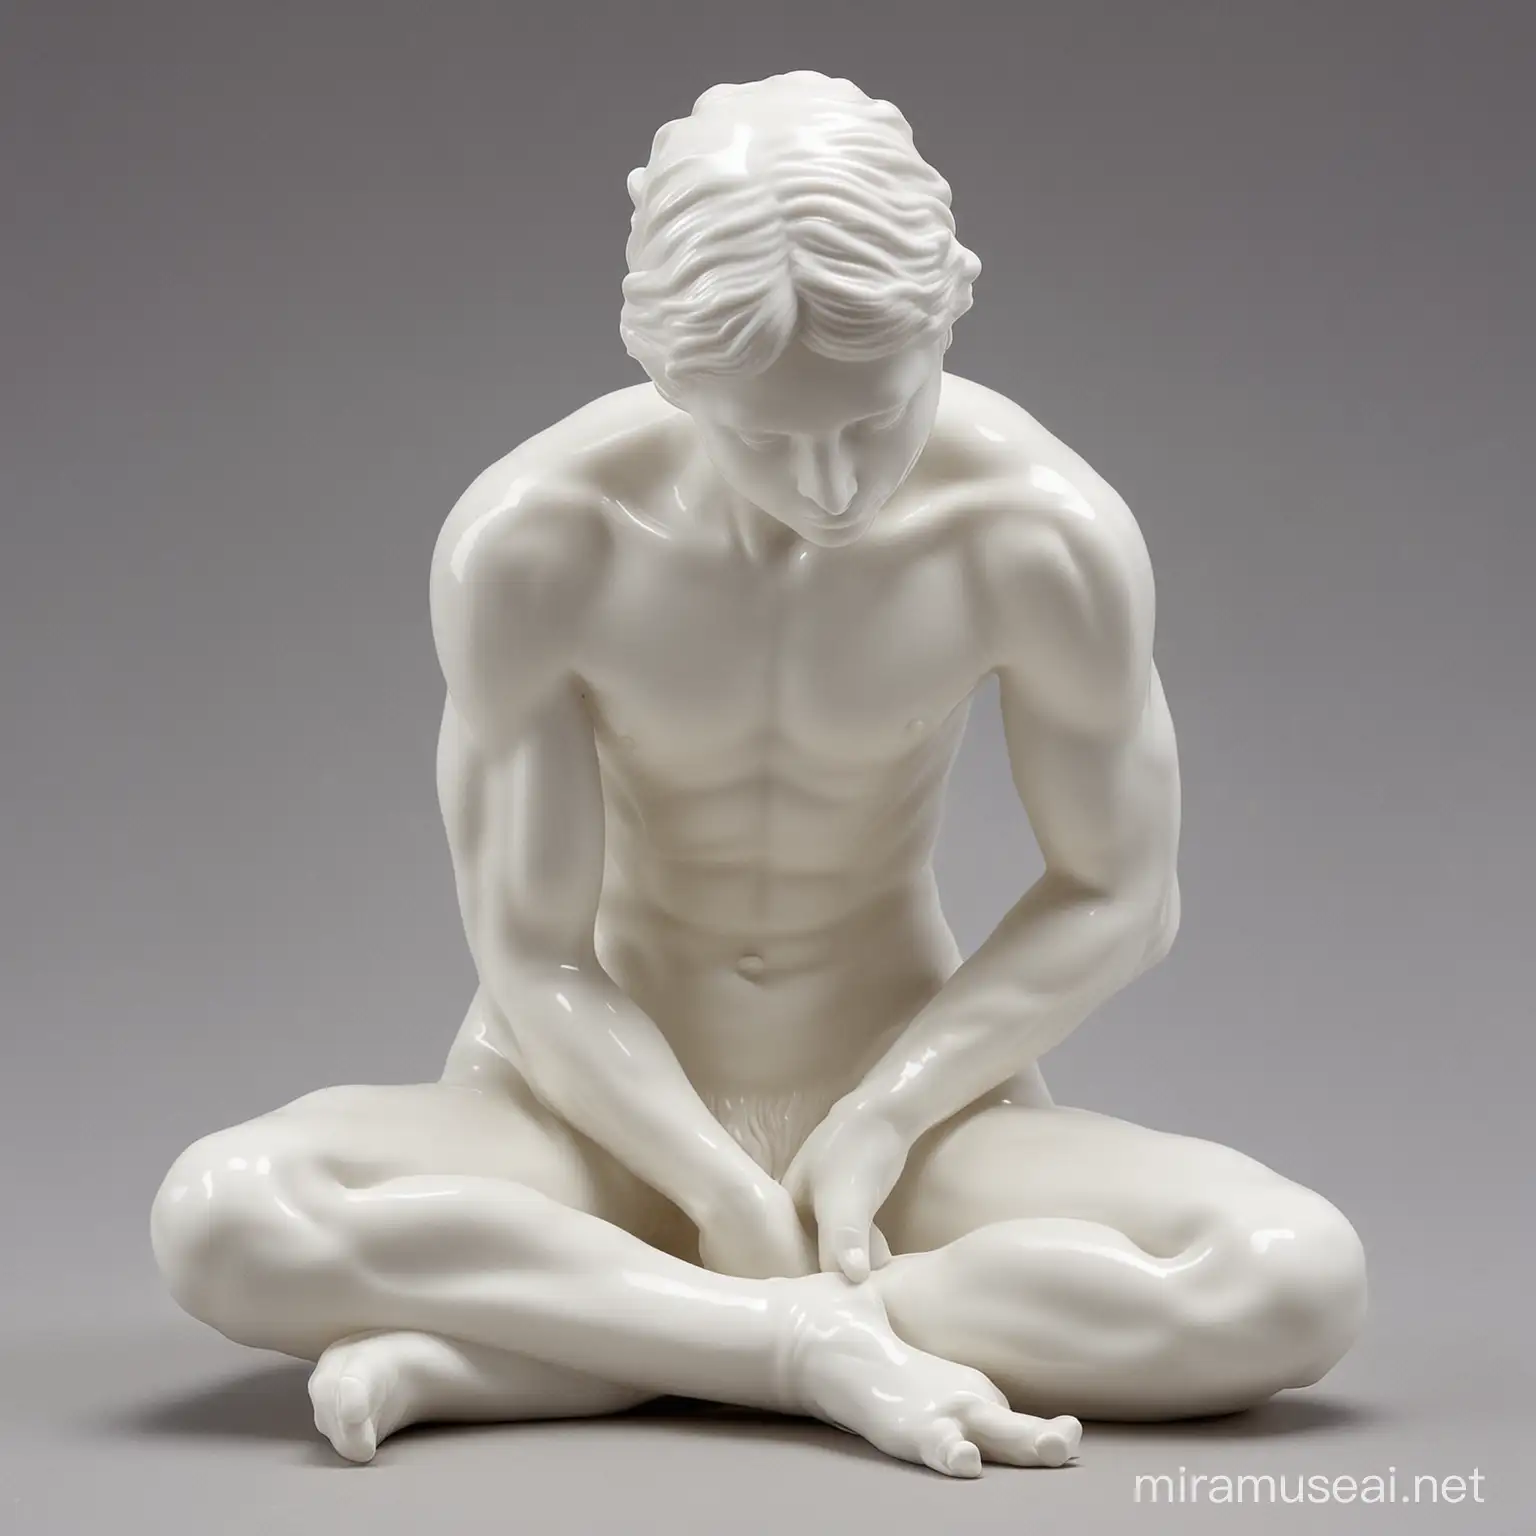 White Porcelain Figure Resembling Rodins Sculpture